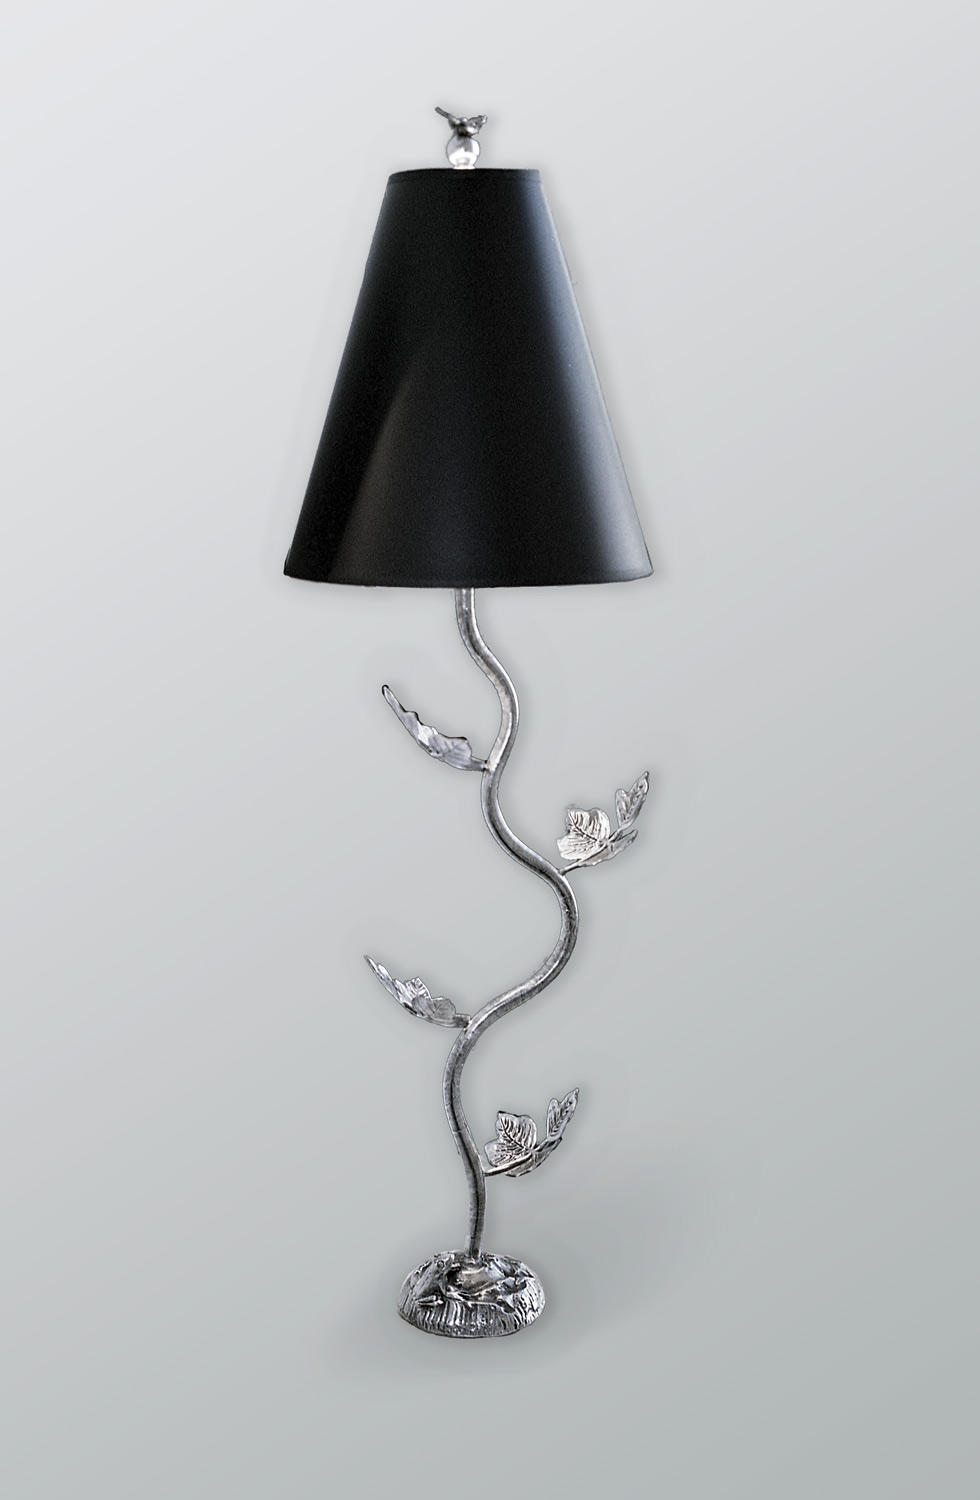 Curvy Kudzu Lamp by Charles H. Reinike III